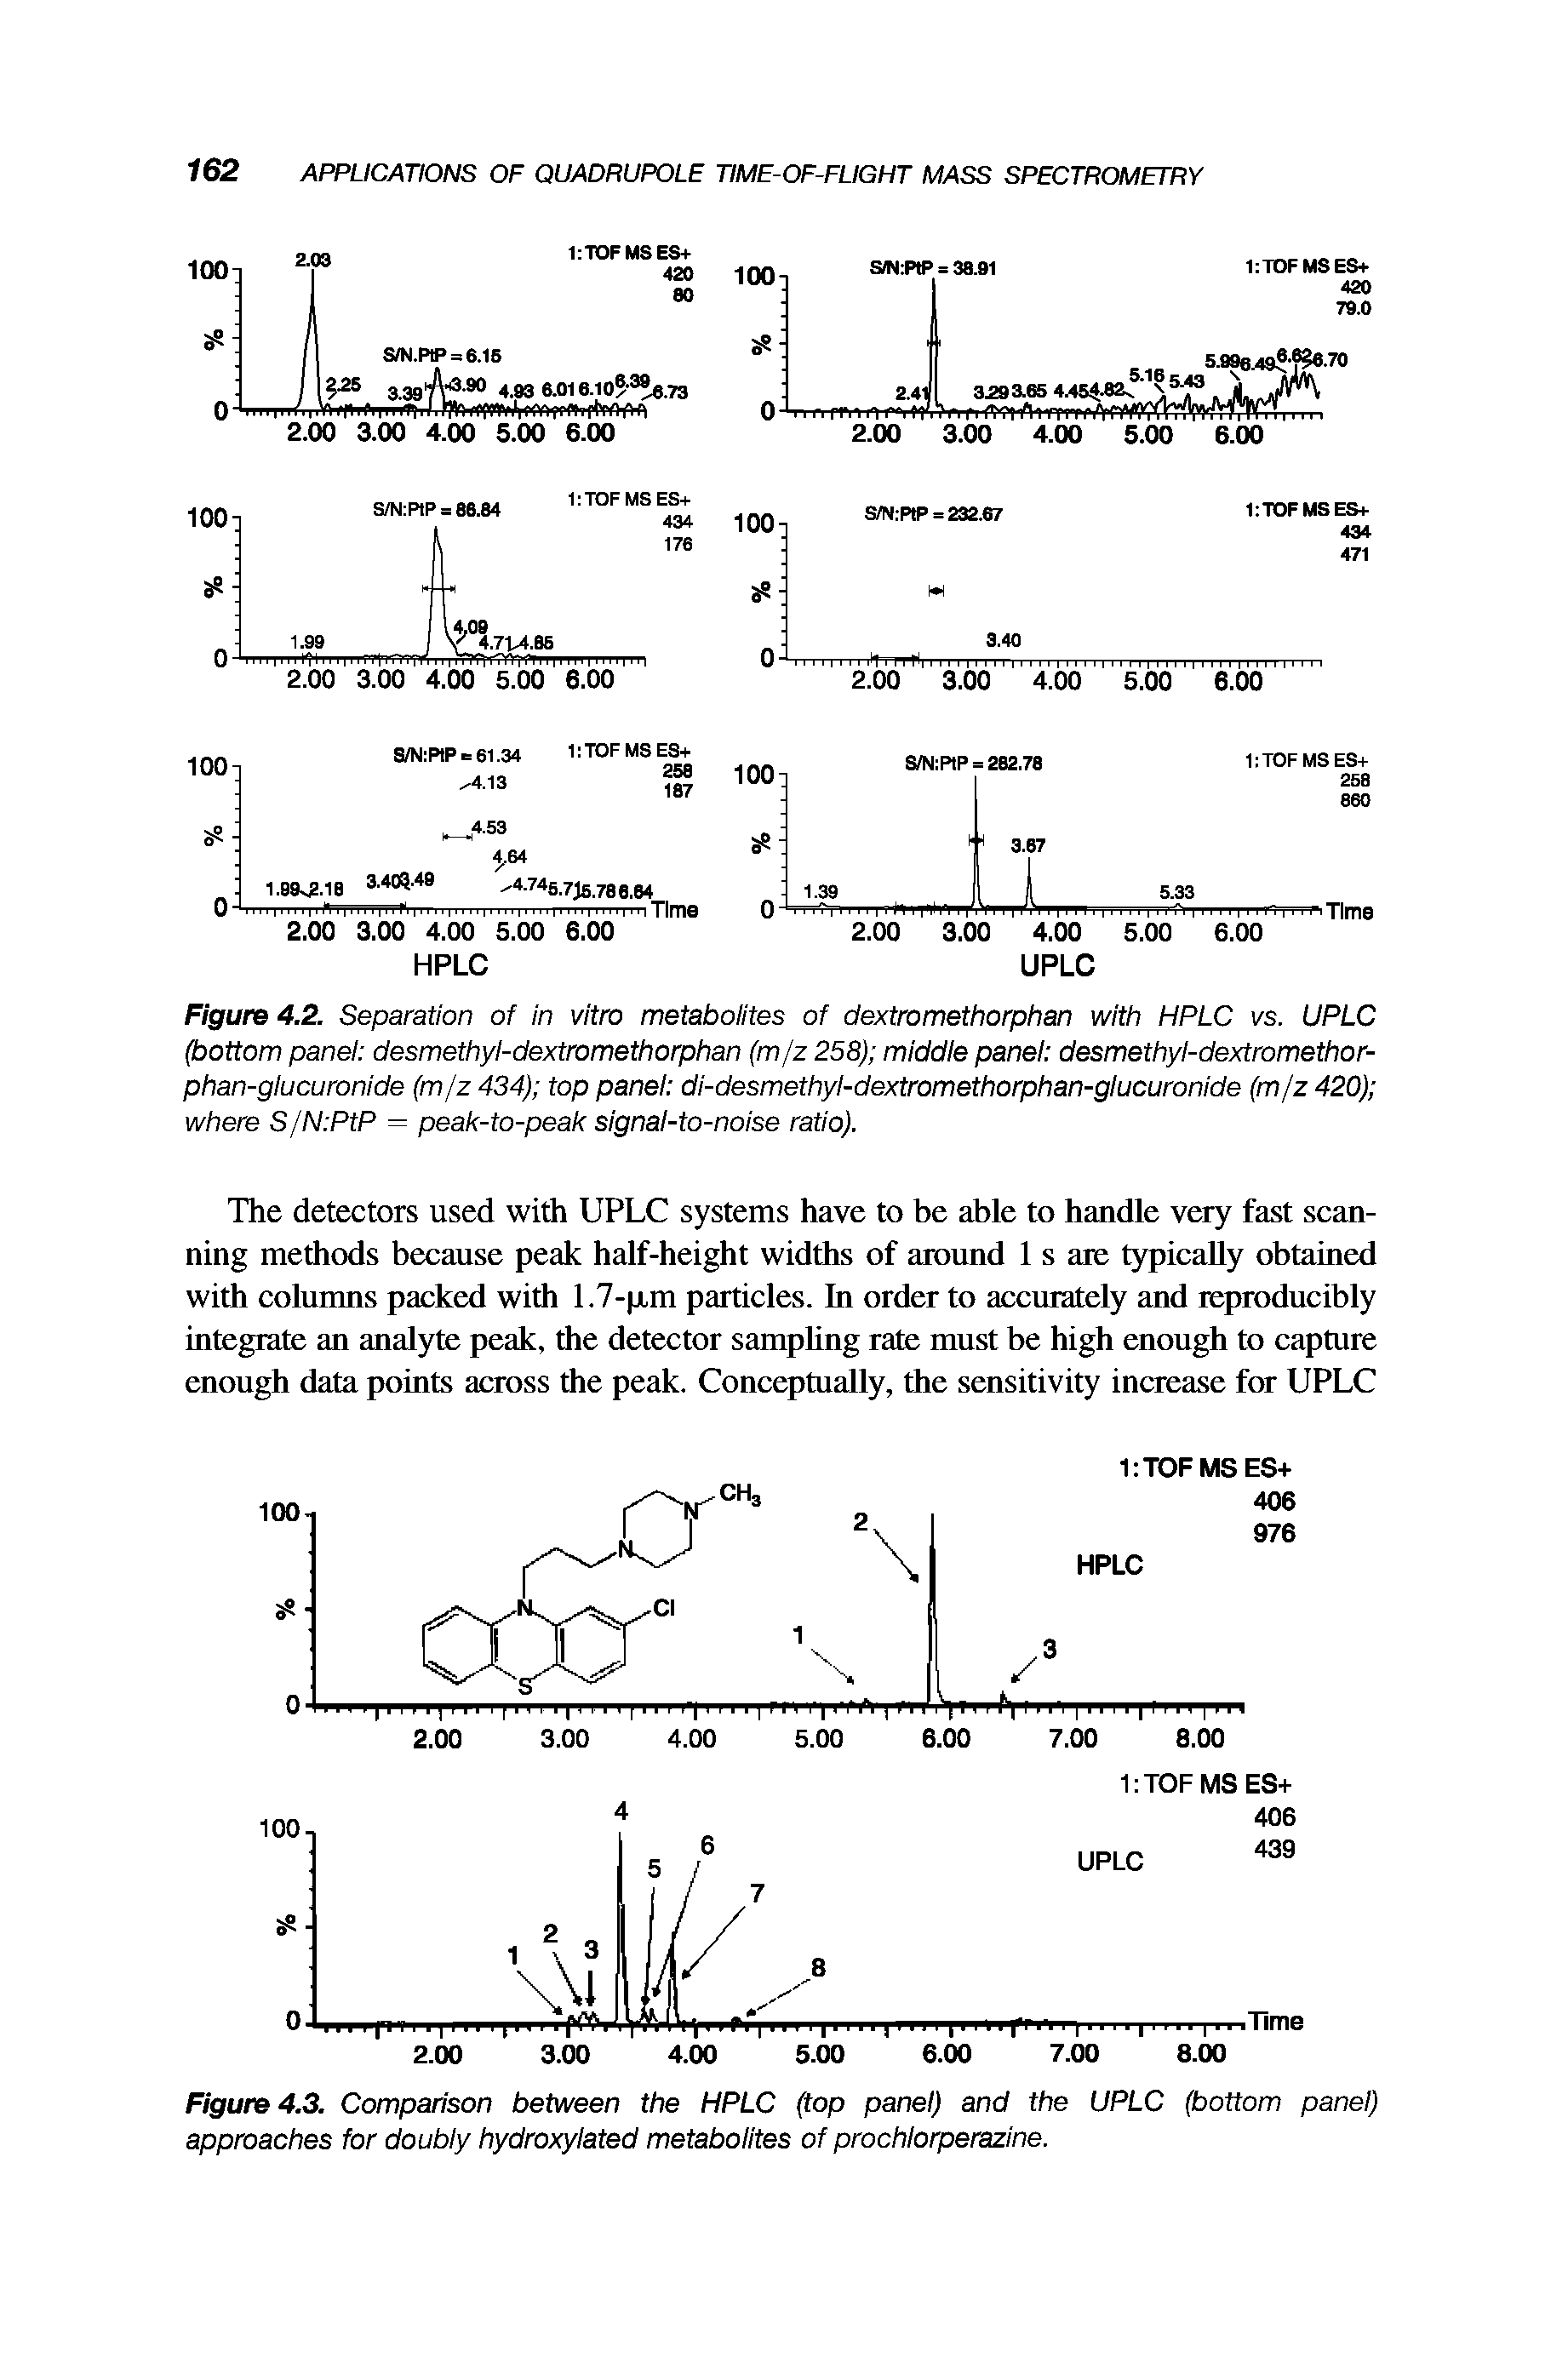 Figure 4.2. Separation of in vitro metabolites of dextromethorphan with HPLC vs. UPLC (bottom panel desmethyl-dextromethorphan (m/z 258) middle panel desmethyl-dextromethor-phan-glucuronide (m/z 434) top panel di-desmethyl-dextromethorphan-glucuronide (m/z 420) where S/N PtP = peak-to-peak signal-to-noise ratio).